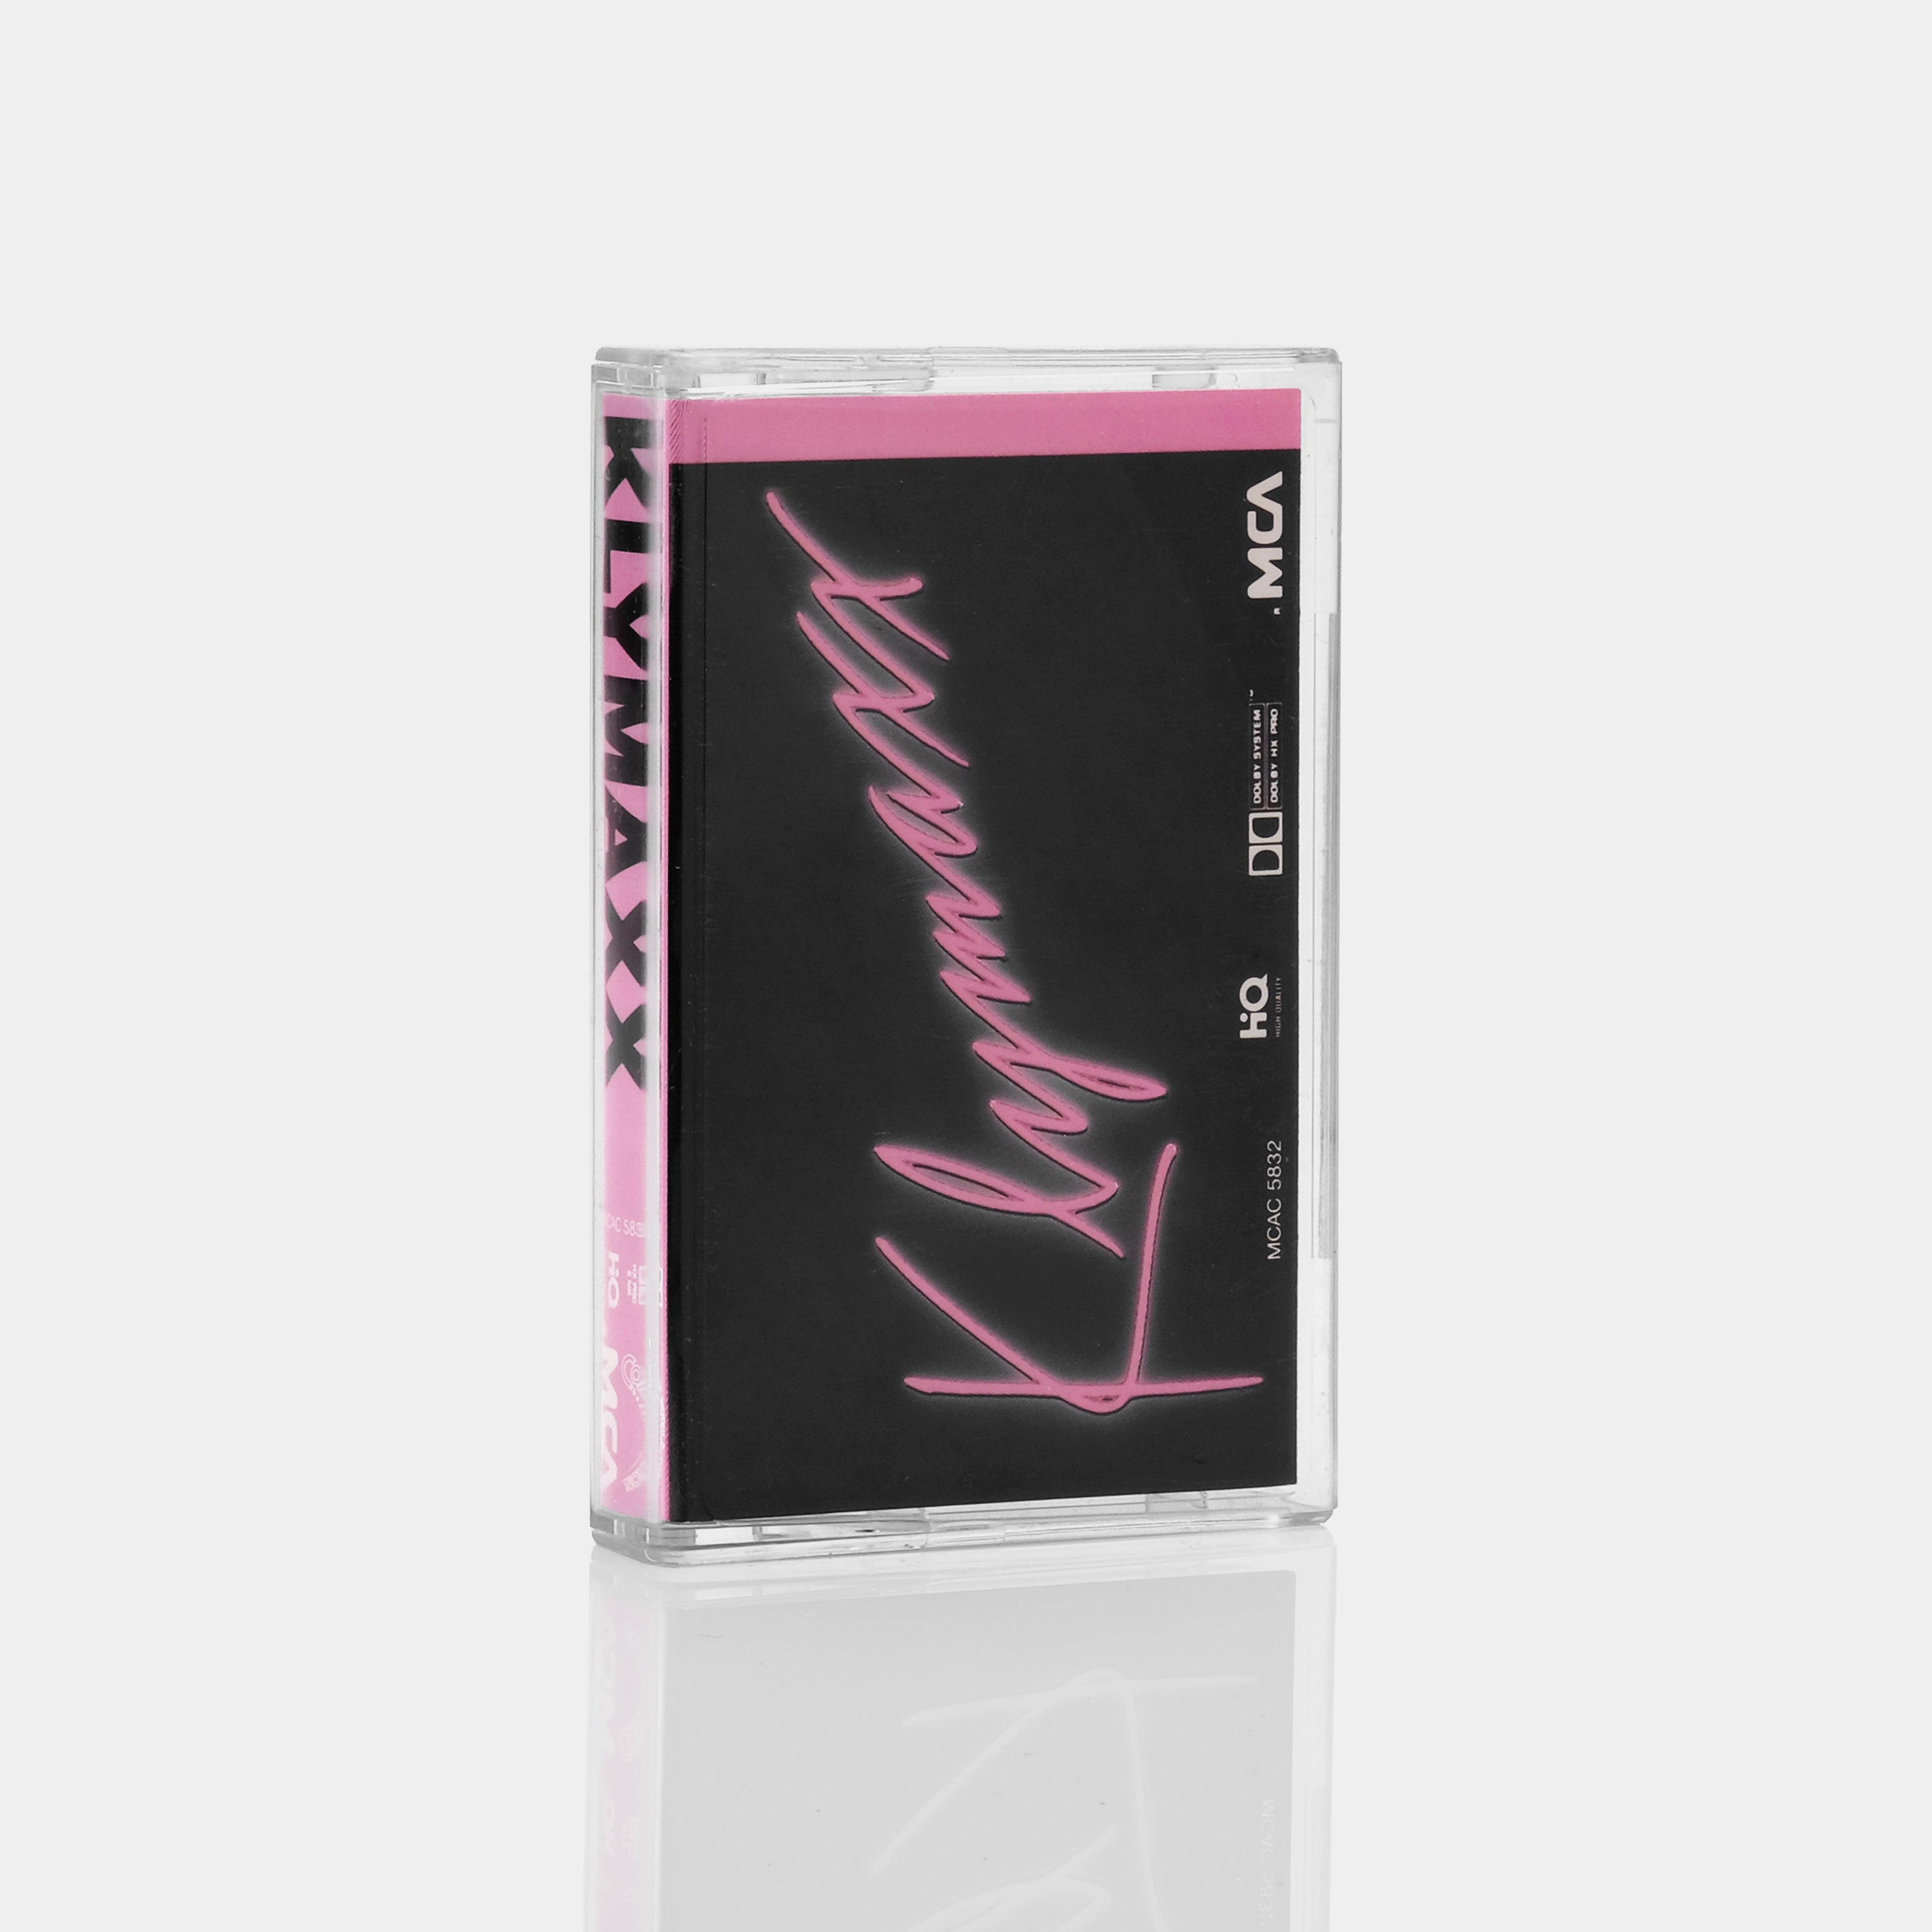 Klymaxx - Klymaxx Cassette Tape